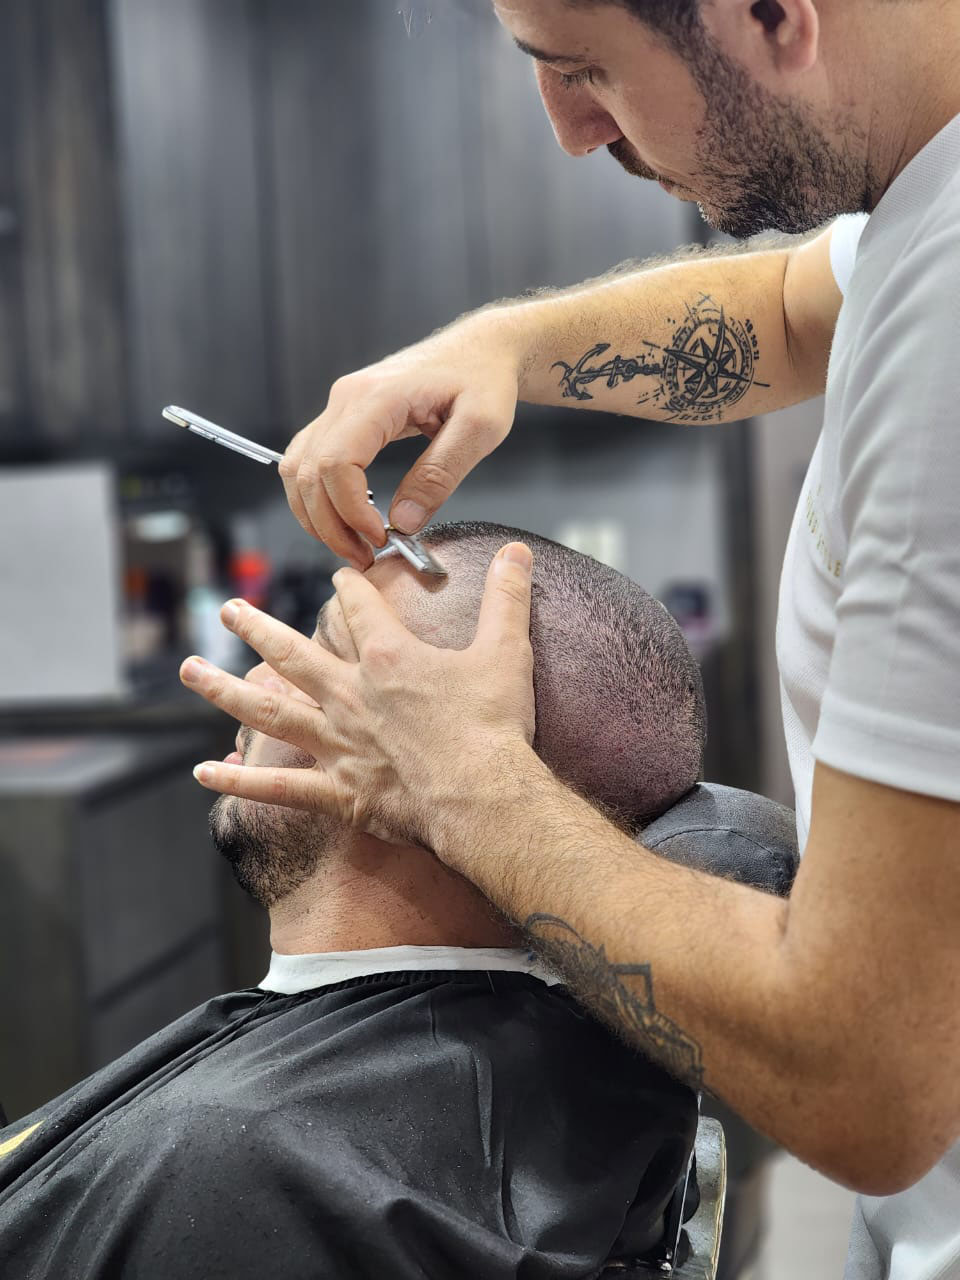 Haircut services for Men in Dubai